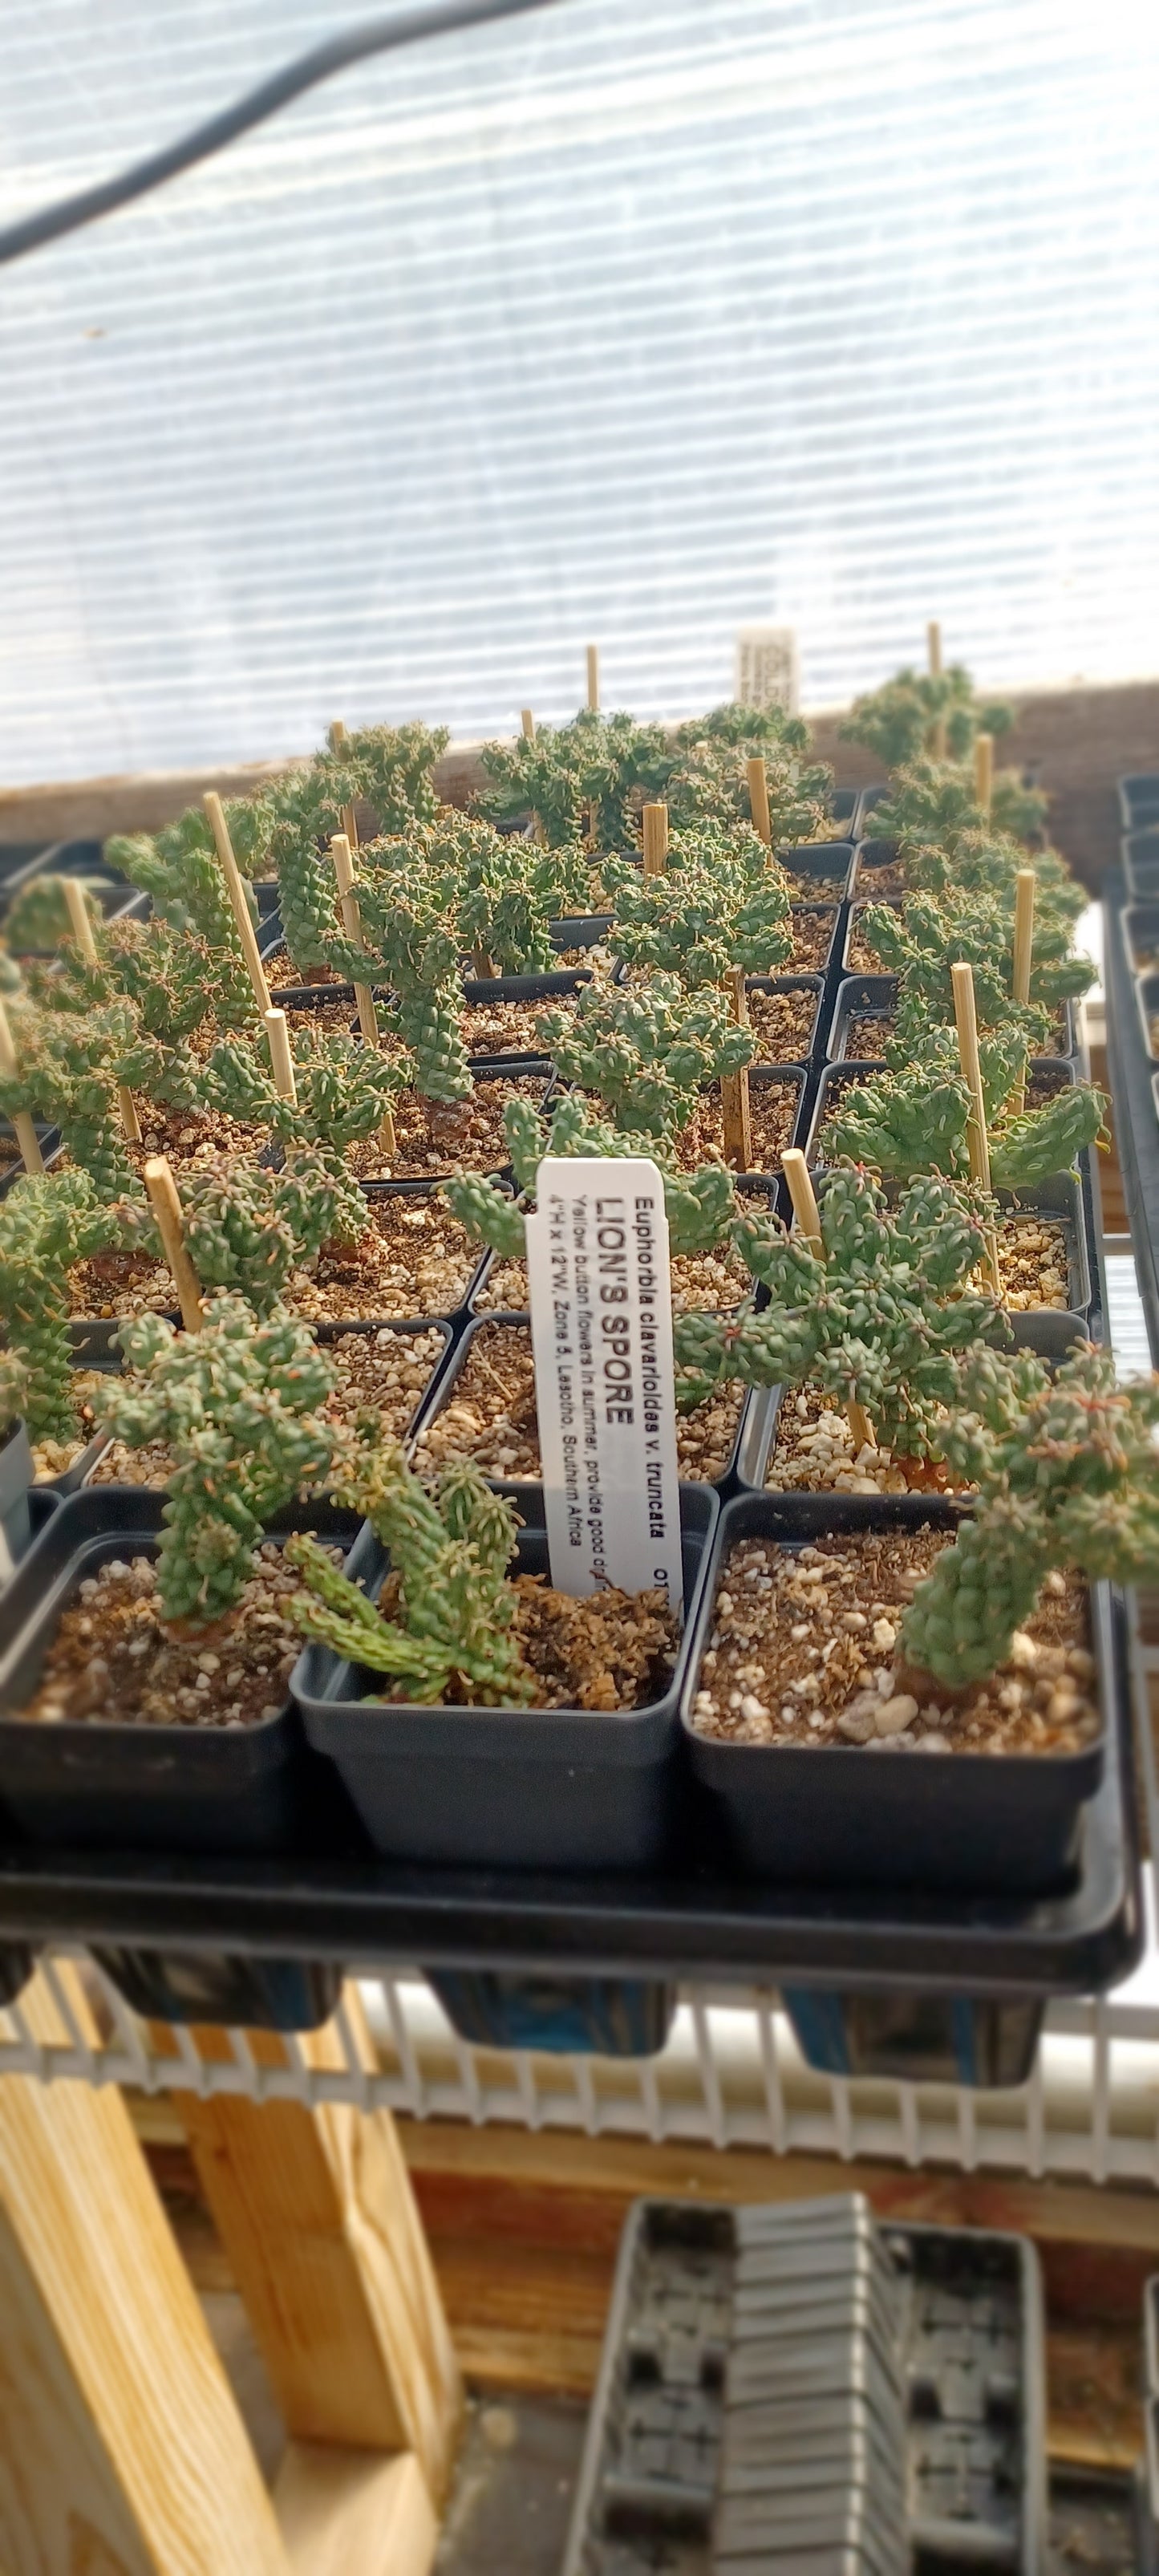 OT001: Euphorbia clavarioides v. truncata COLD HARDY CACTUS